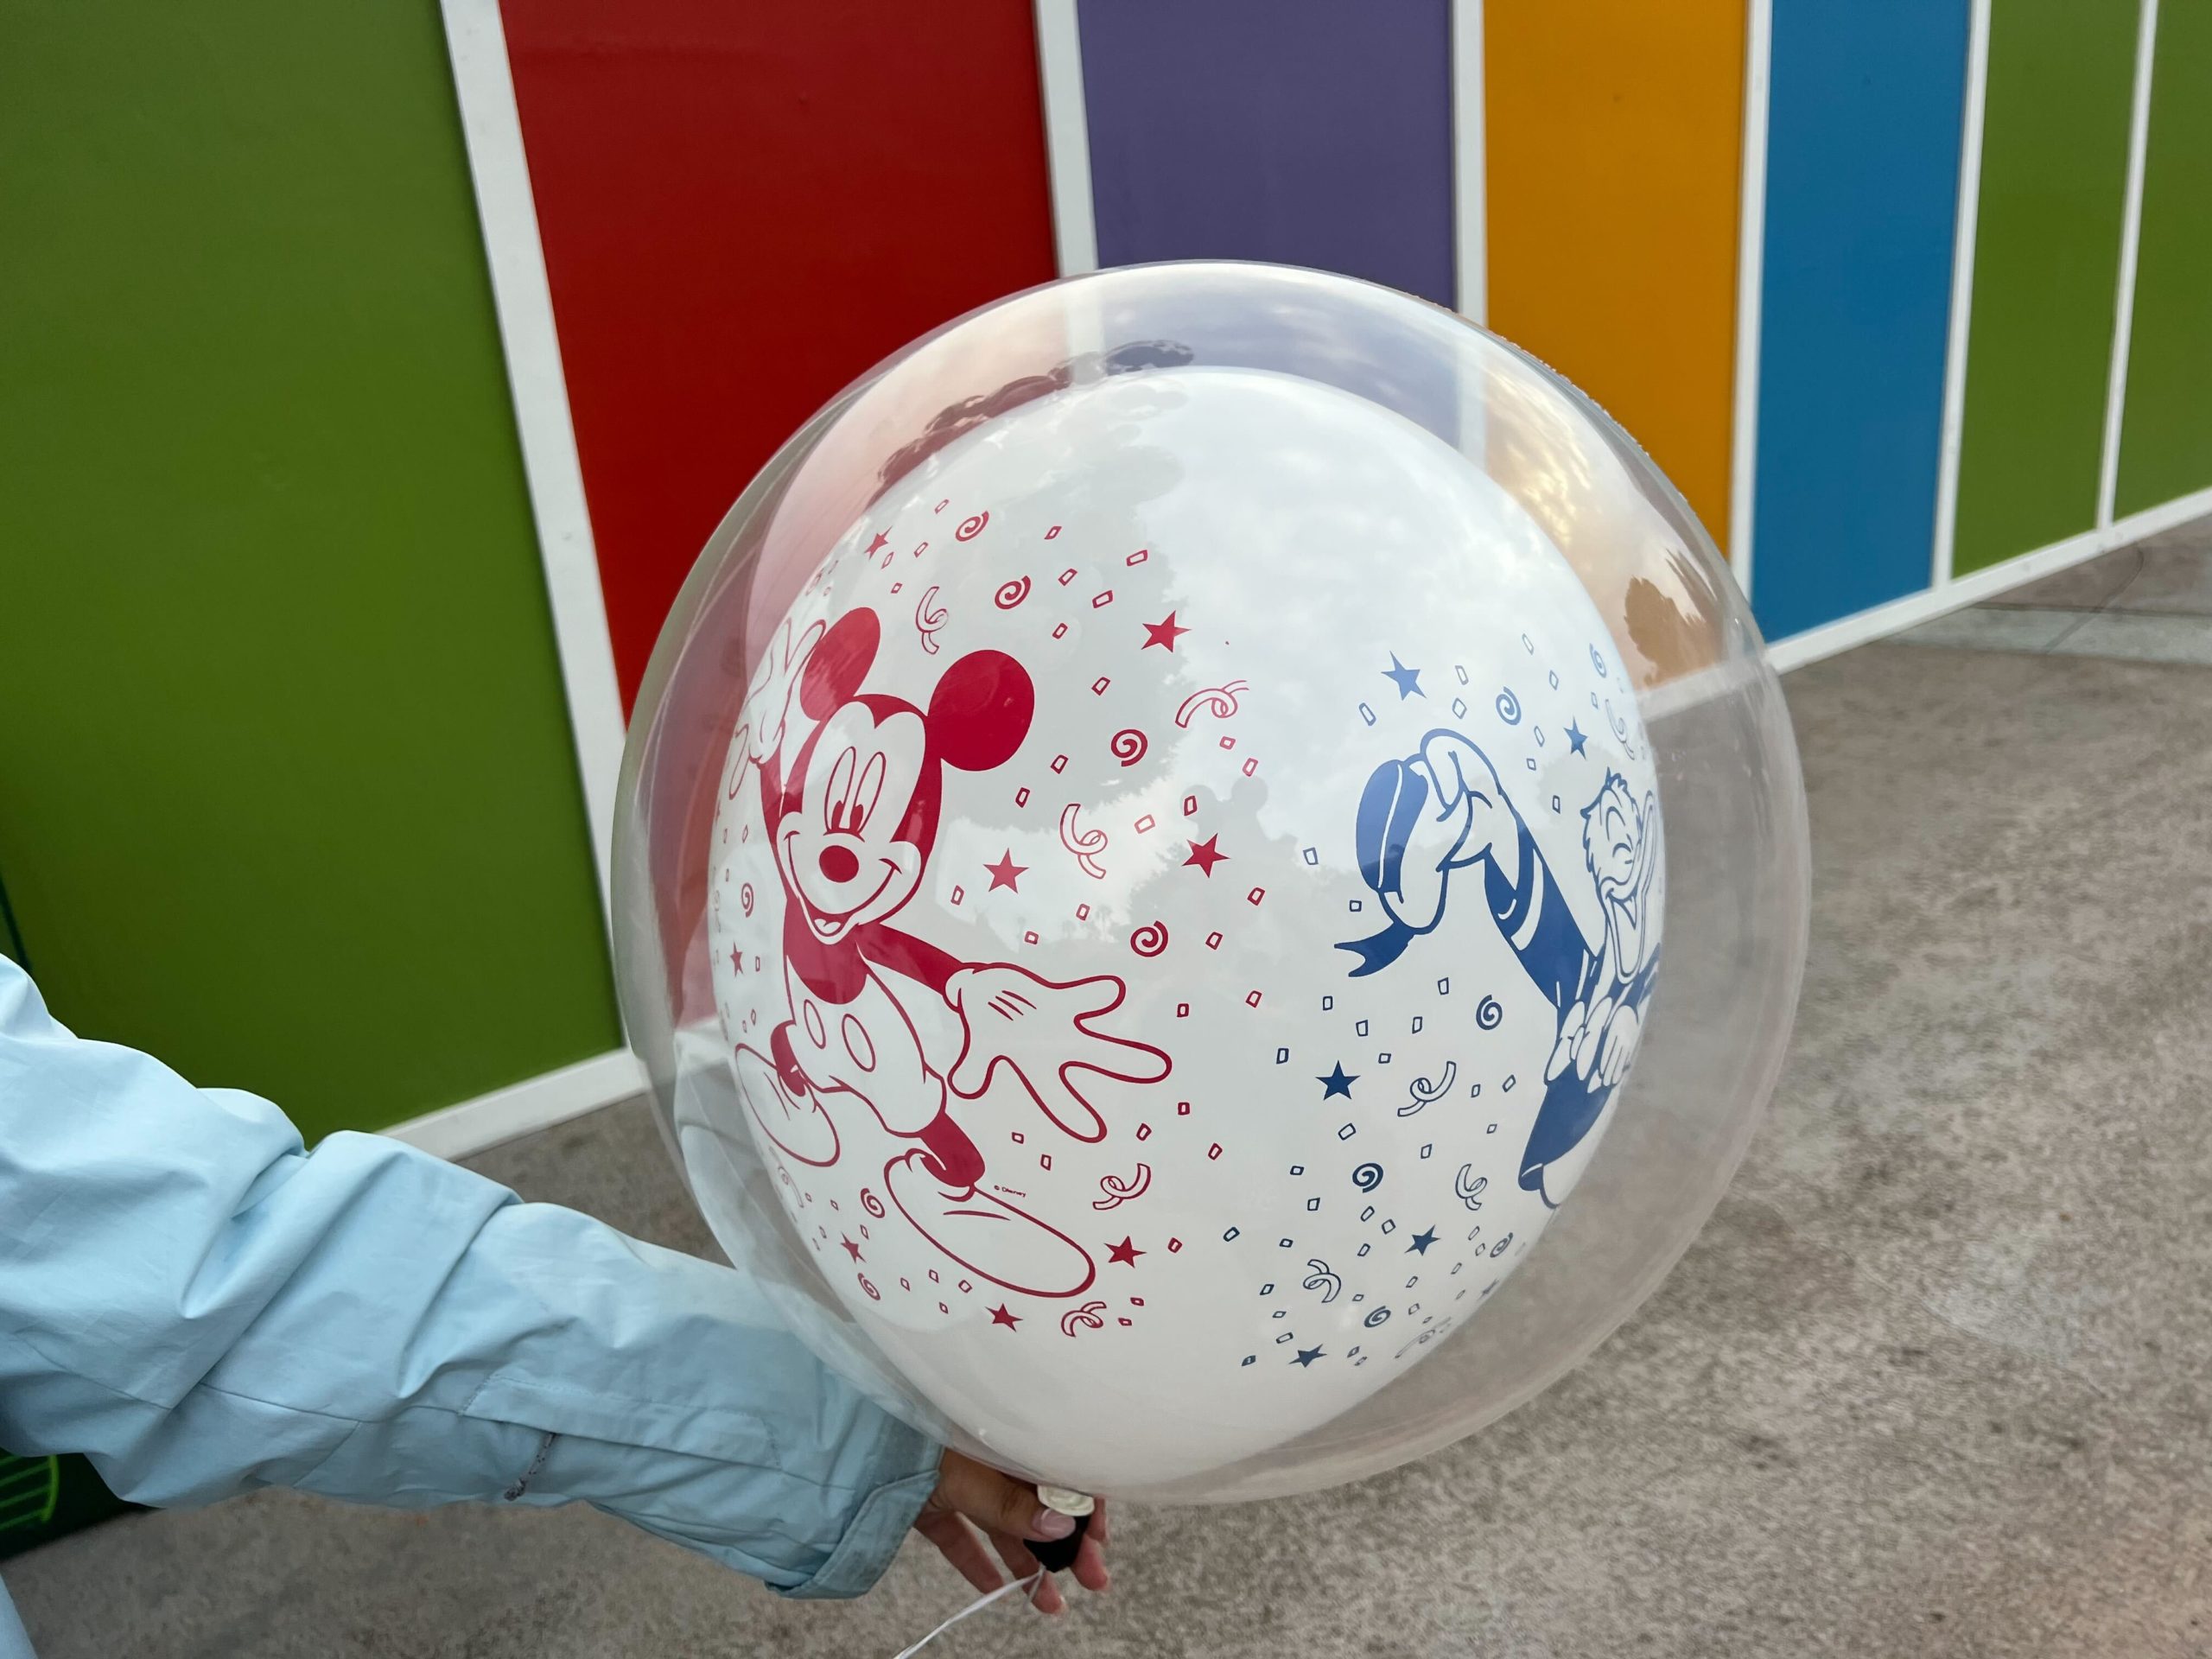 New Disneyland Downtown Disney Balloon